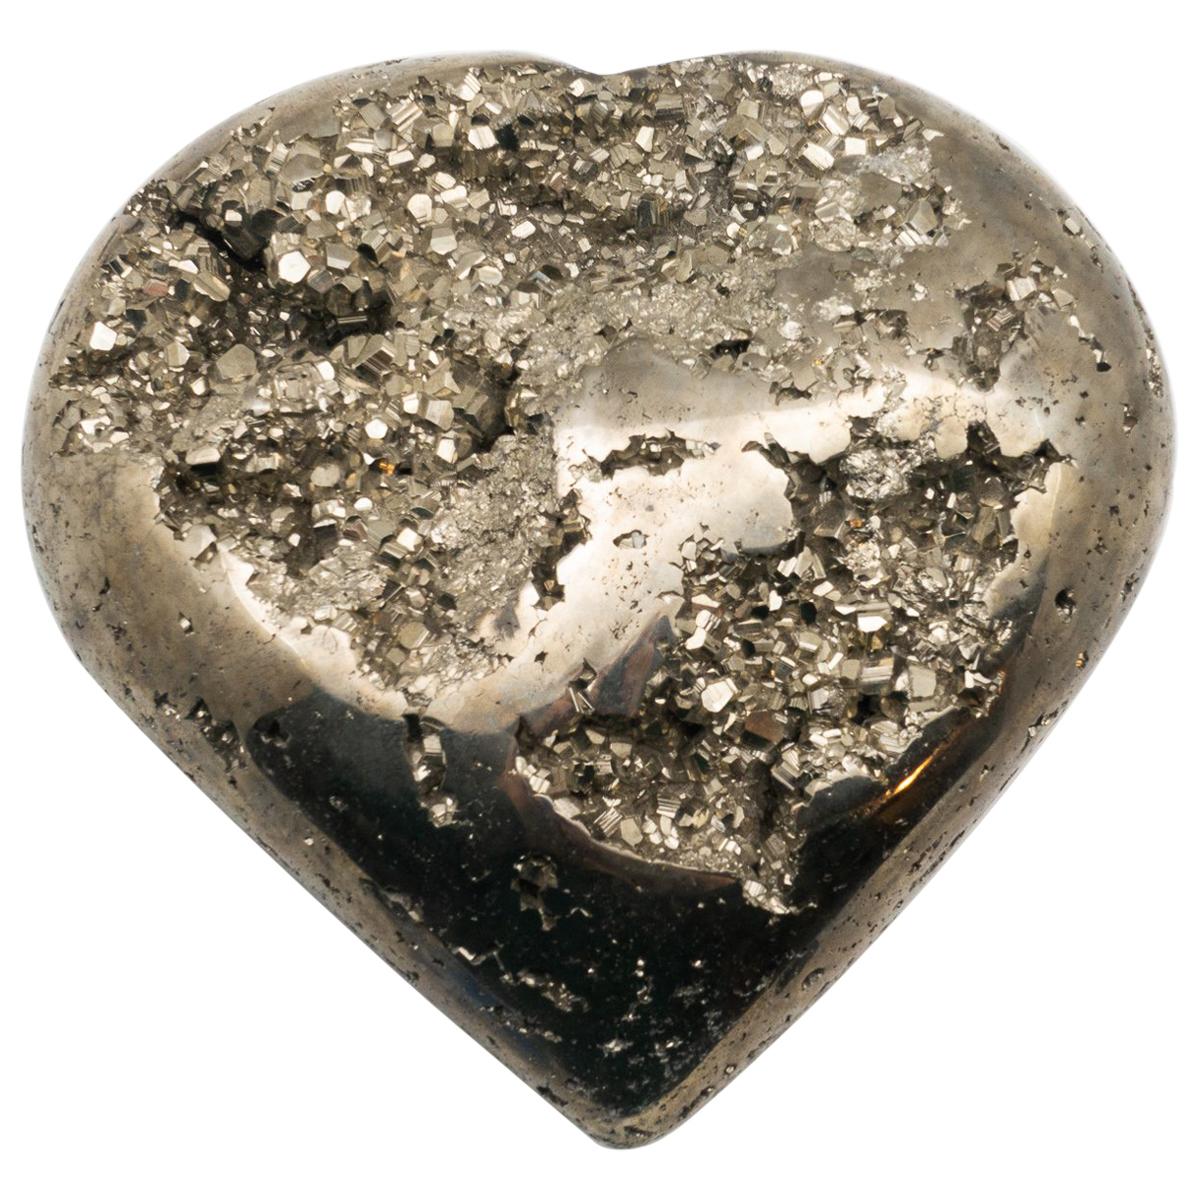 Massive Pyrite Valentine's Day Heart